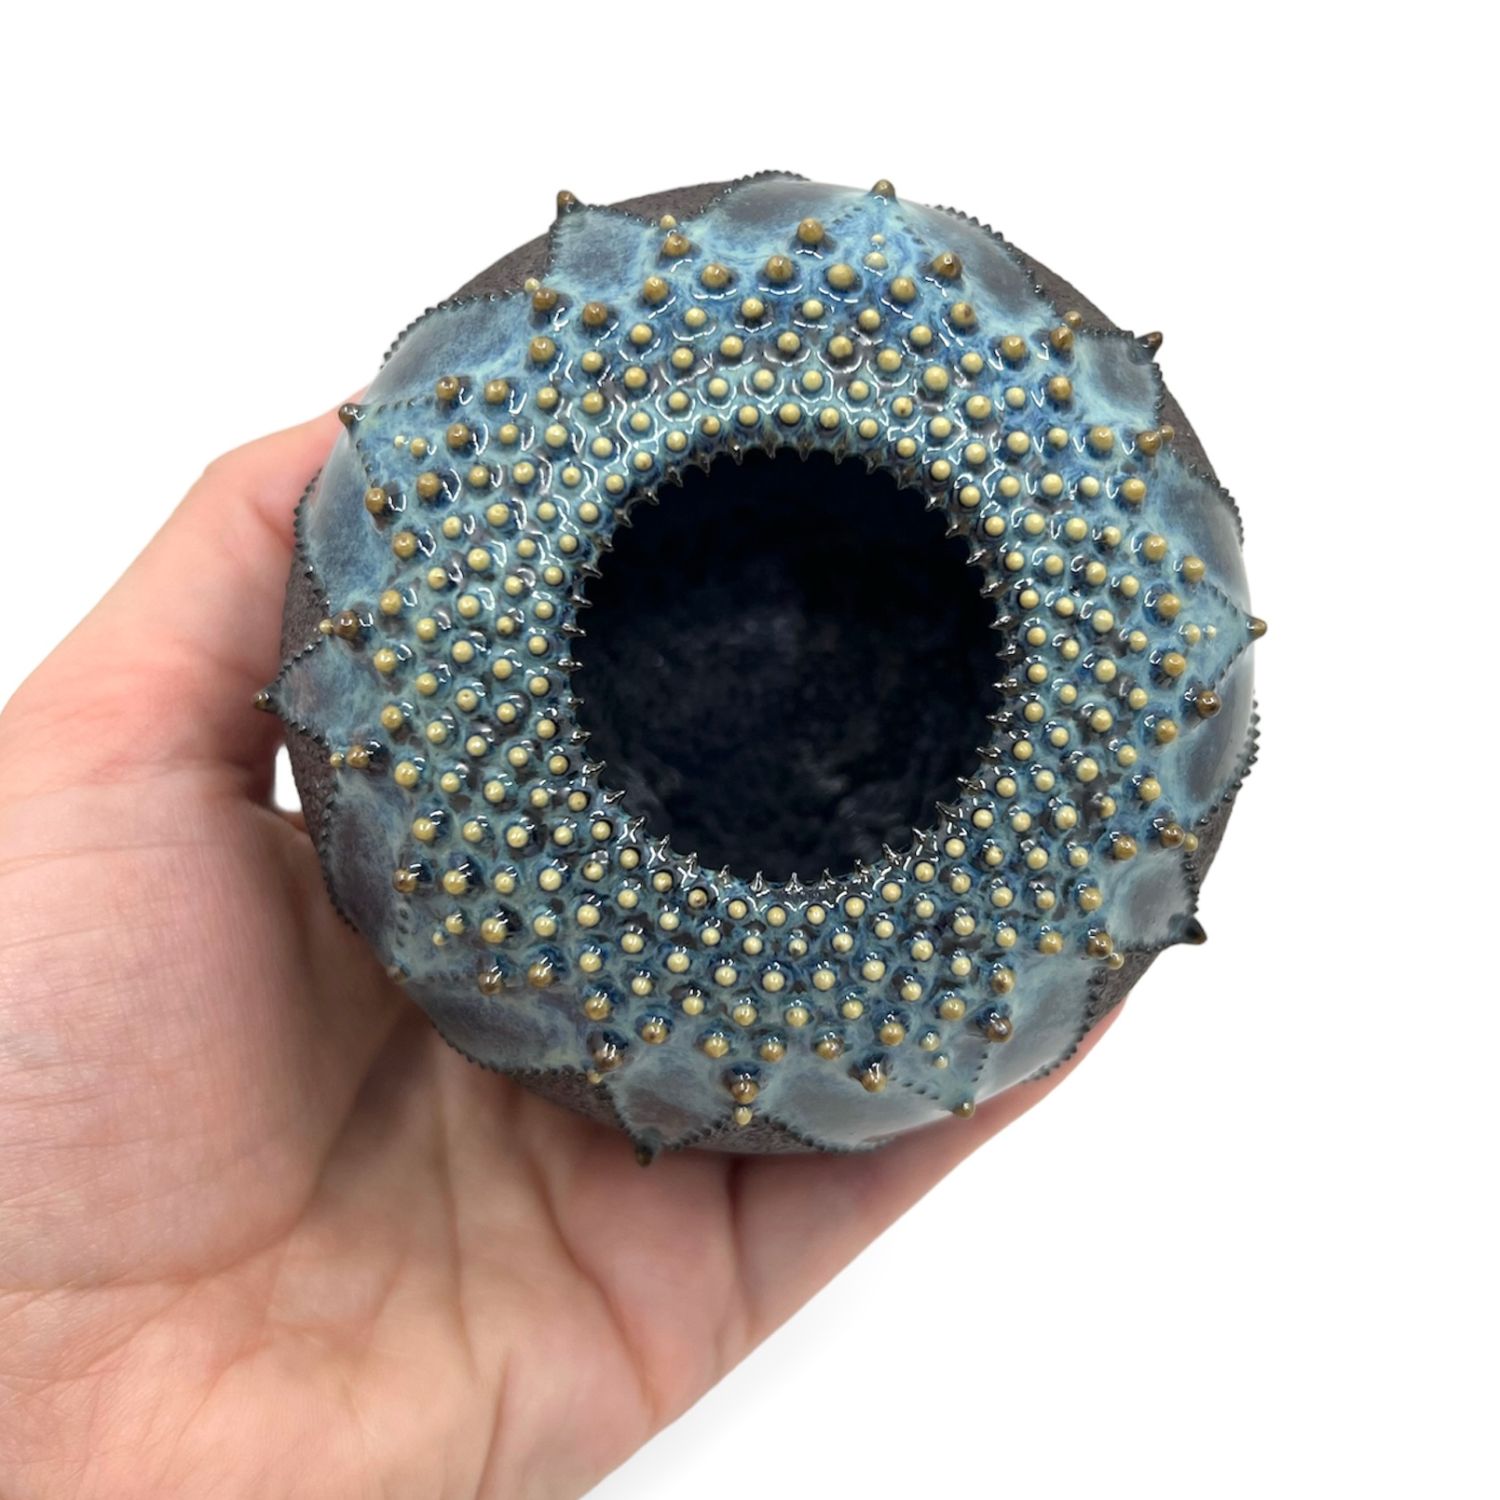 Zara Gardner: Black & Turquoise Urchin Sculpture Product Image 2 of 2